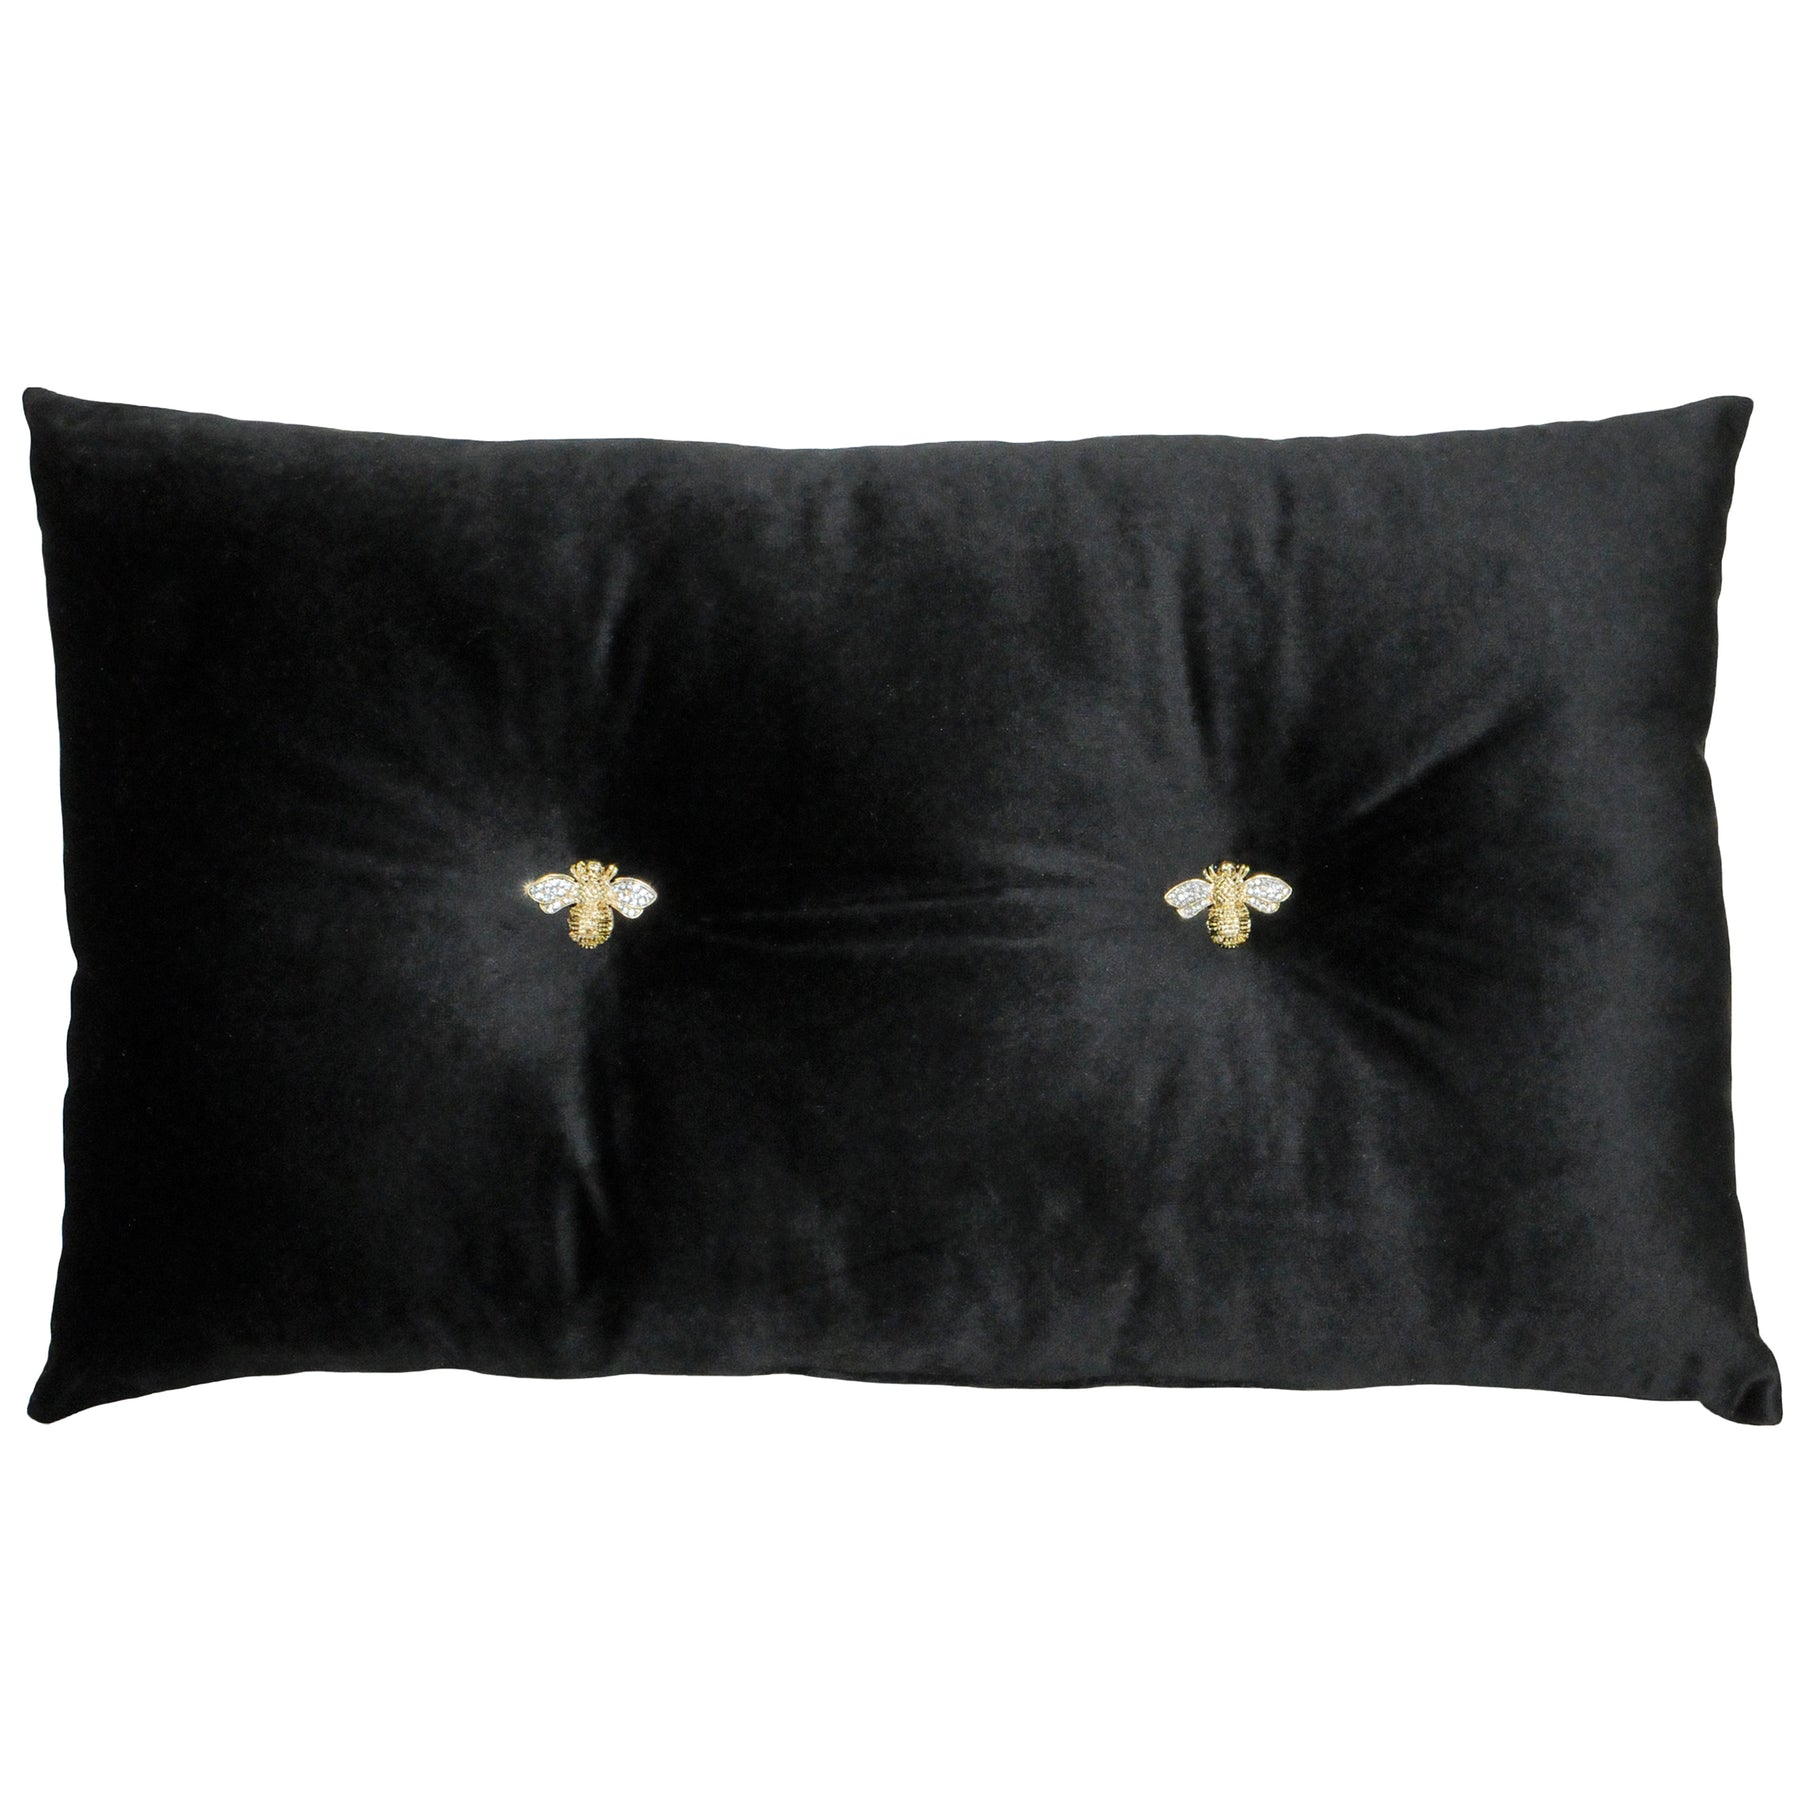 Bumble Bee Velvet 30cm x 50cm Filled Cushion Black